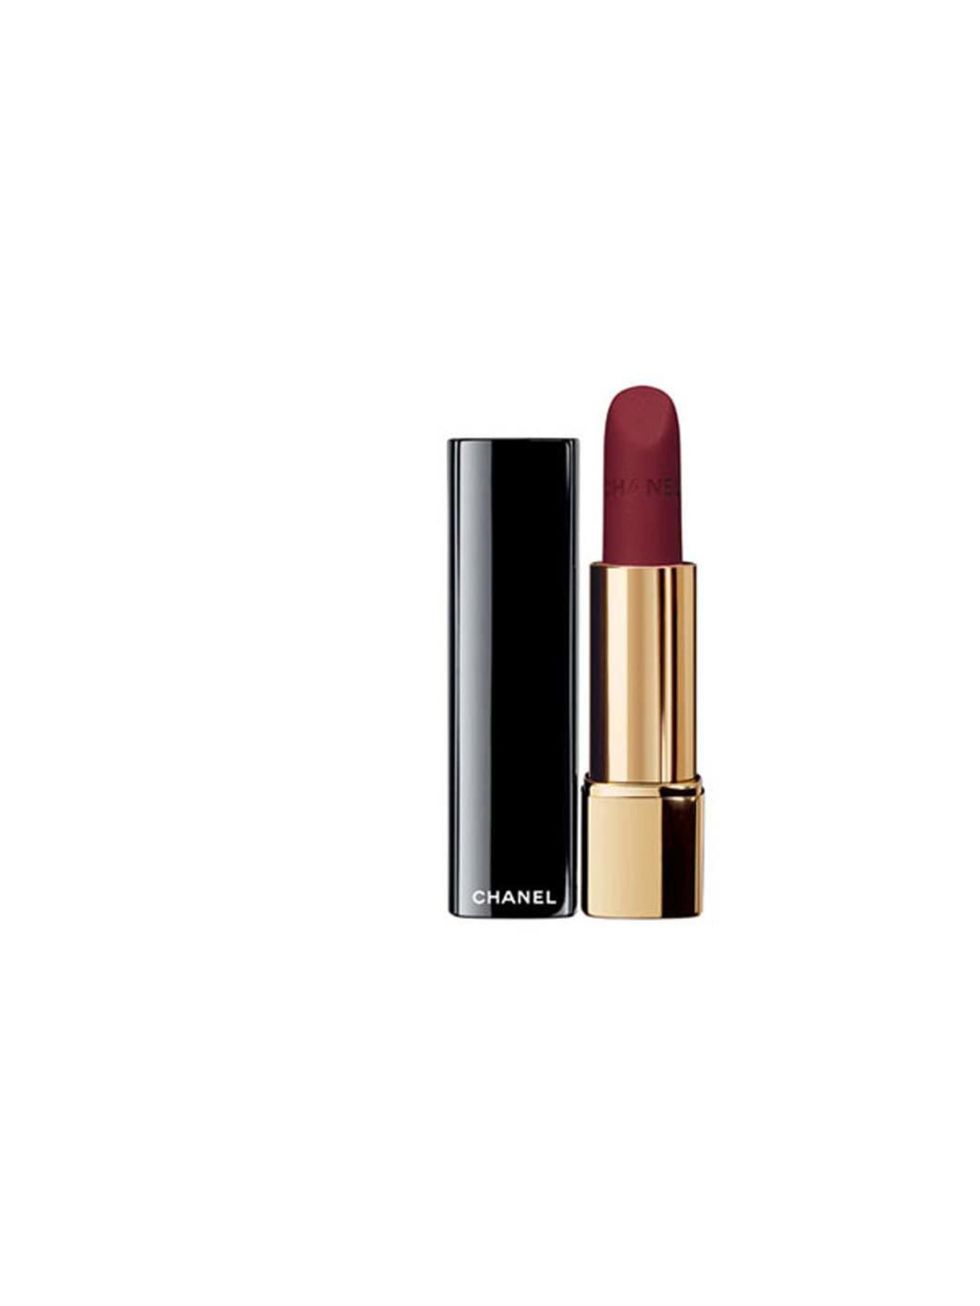 <p>Natasha wears <a href="http://www.selfridges.com/en/Beauty/Brand-rooms/Brands/CHANEL/Makeup/Lips/Lipsticks/ROUGE-ALLURE-Luminous-Satin-Lip-Colour_437-73004626-ROUGEALLURE/">Chanel Rouge Allure Lip Color in Passion, £25</a></p>